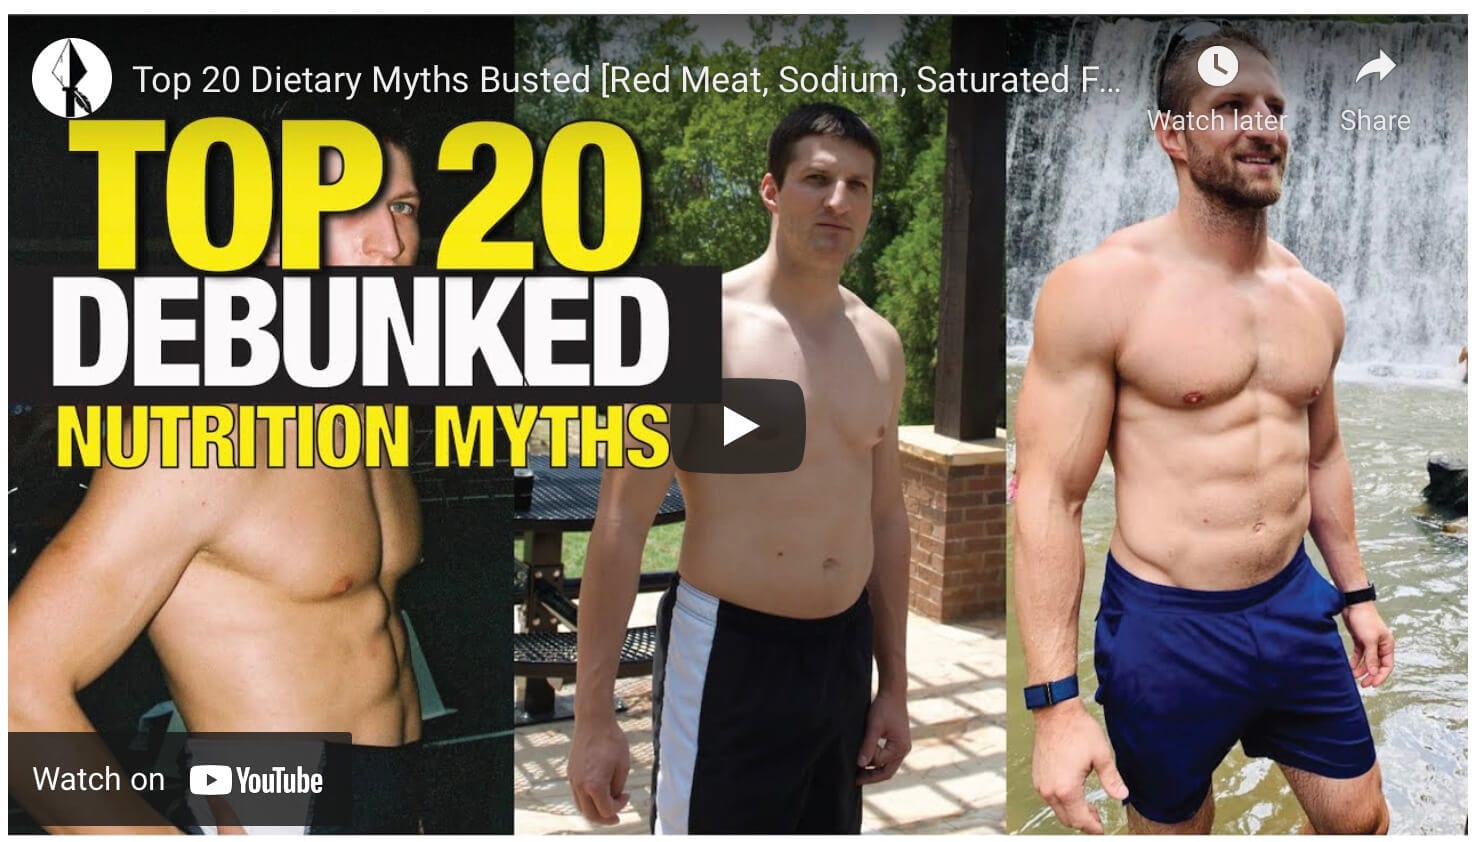 Top dietary myths video thumbnail.